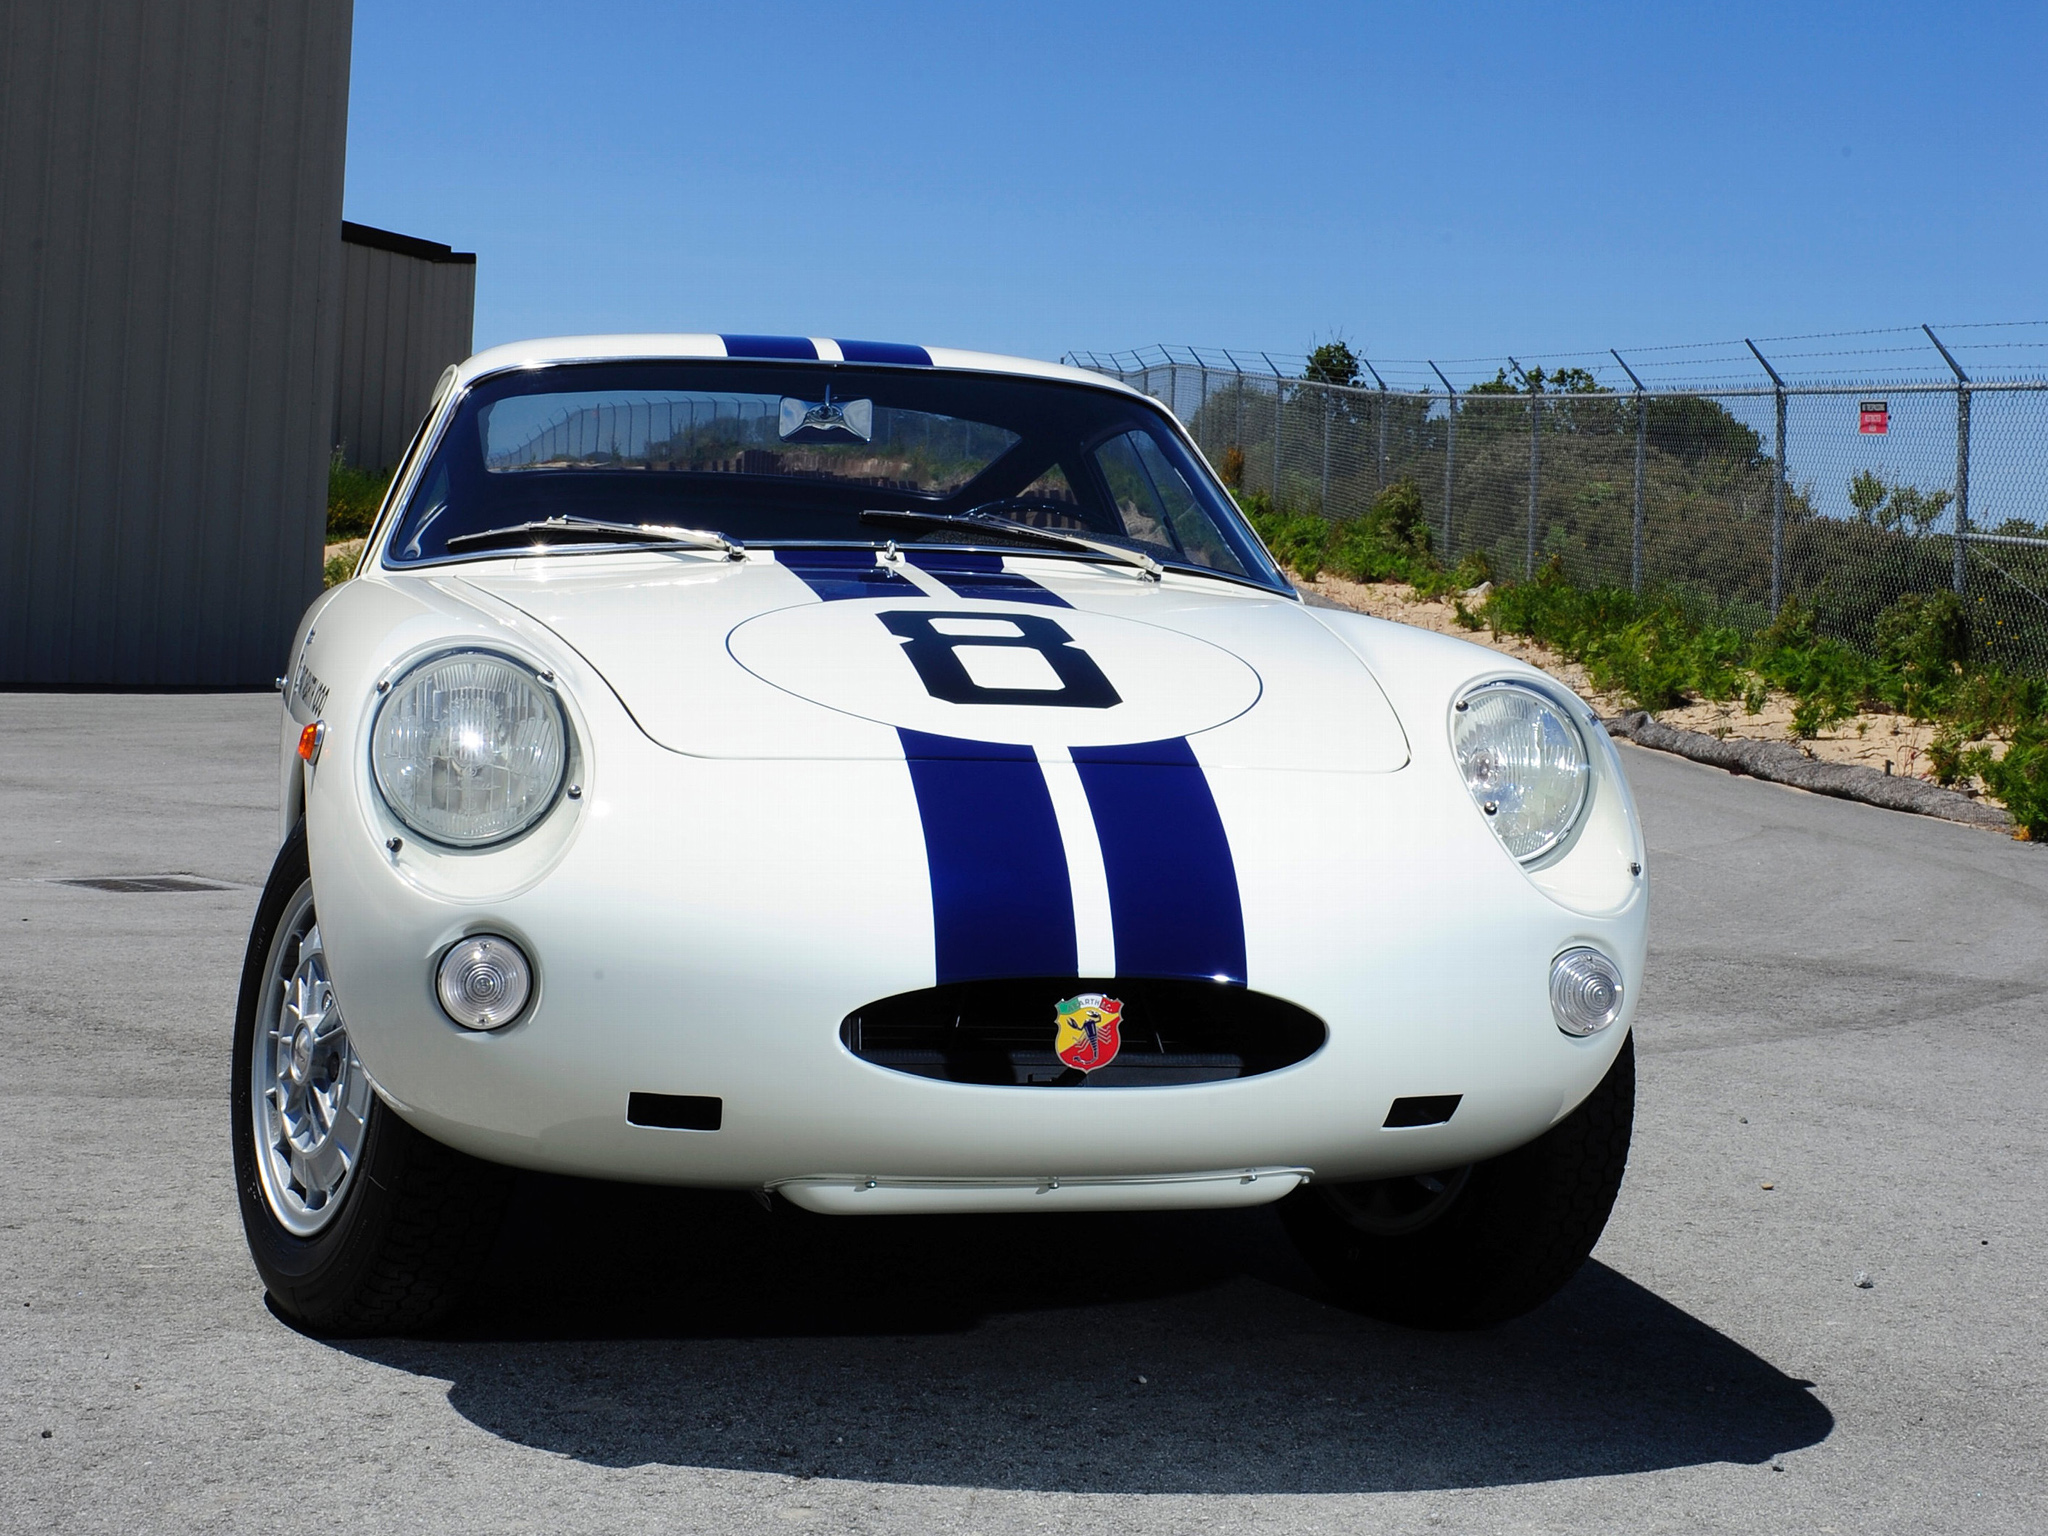 1961, Fiat, Abarth, 1000, Gt, Bialbero, Race, Racing, Rally, Classic Wallpaper